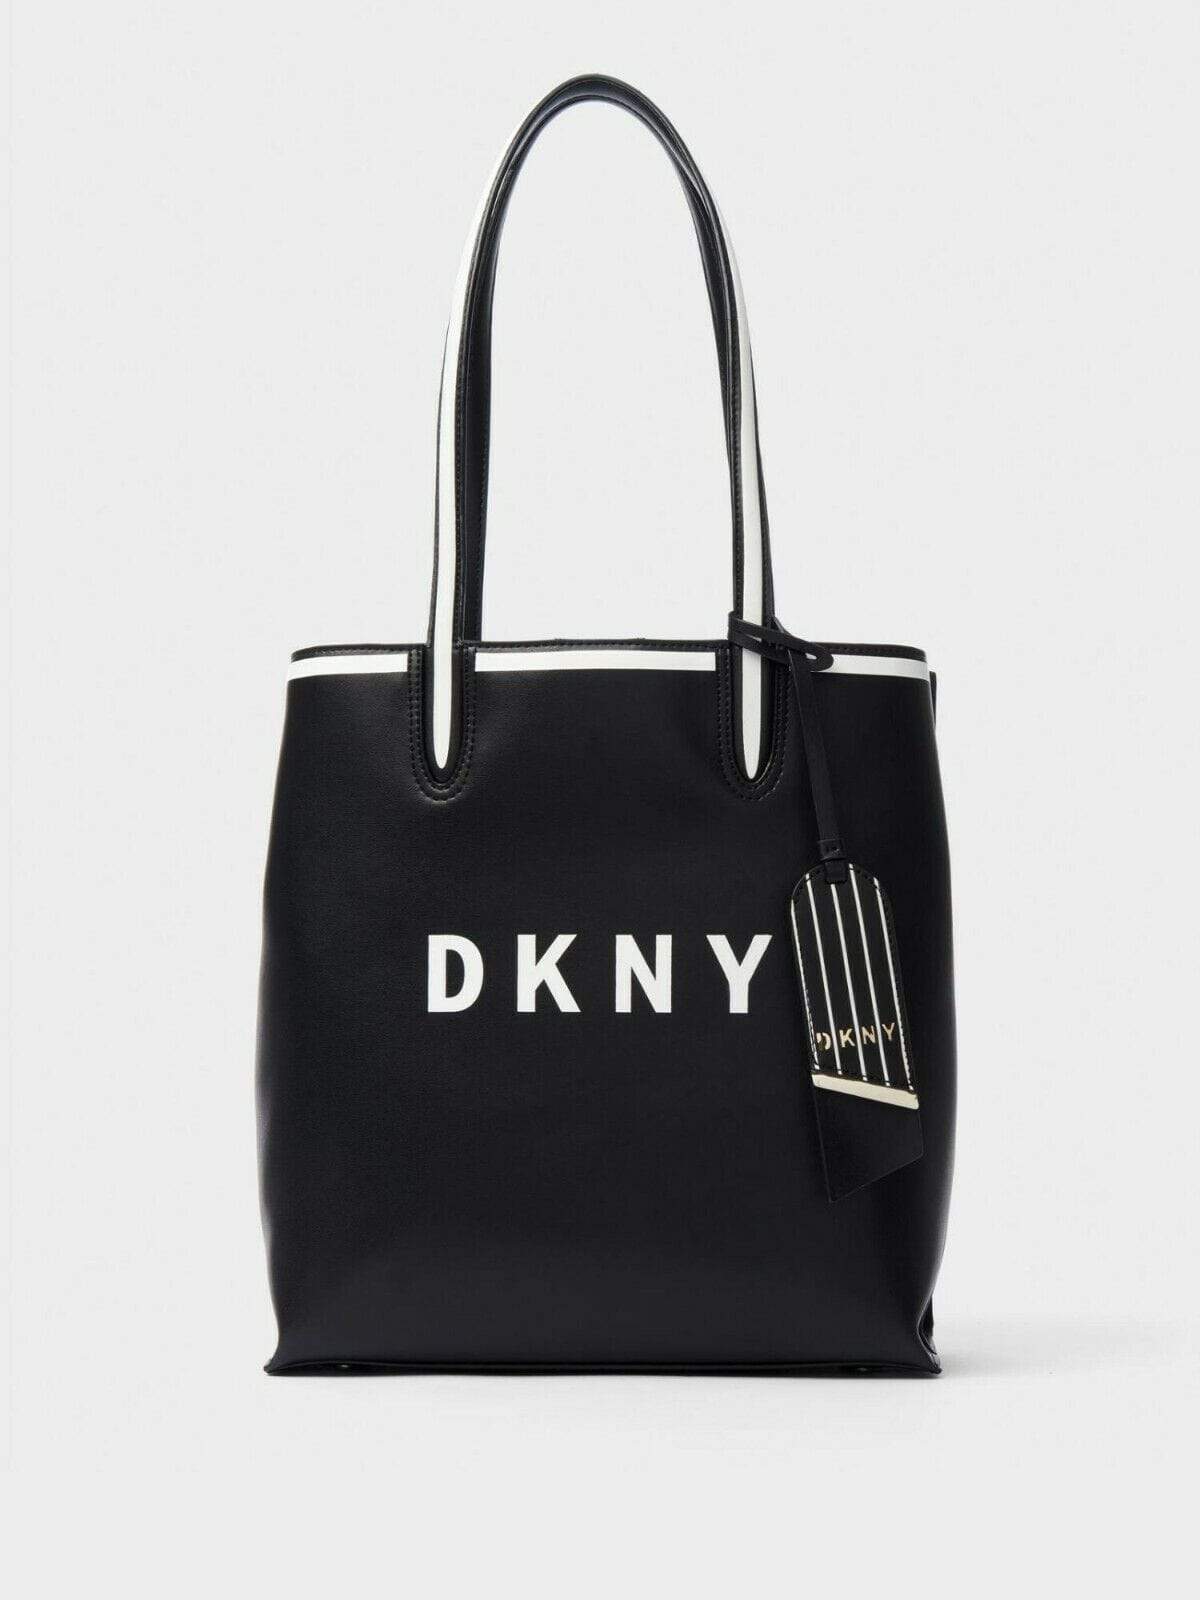 DKNY Bags Black/White Tote Bag Black Jade Striped Leather Logo Tote